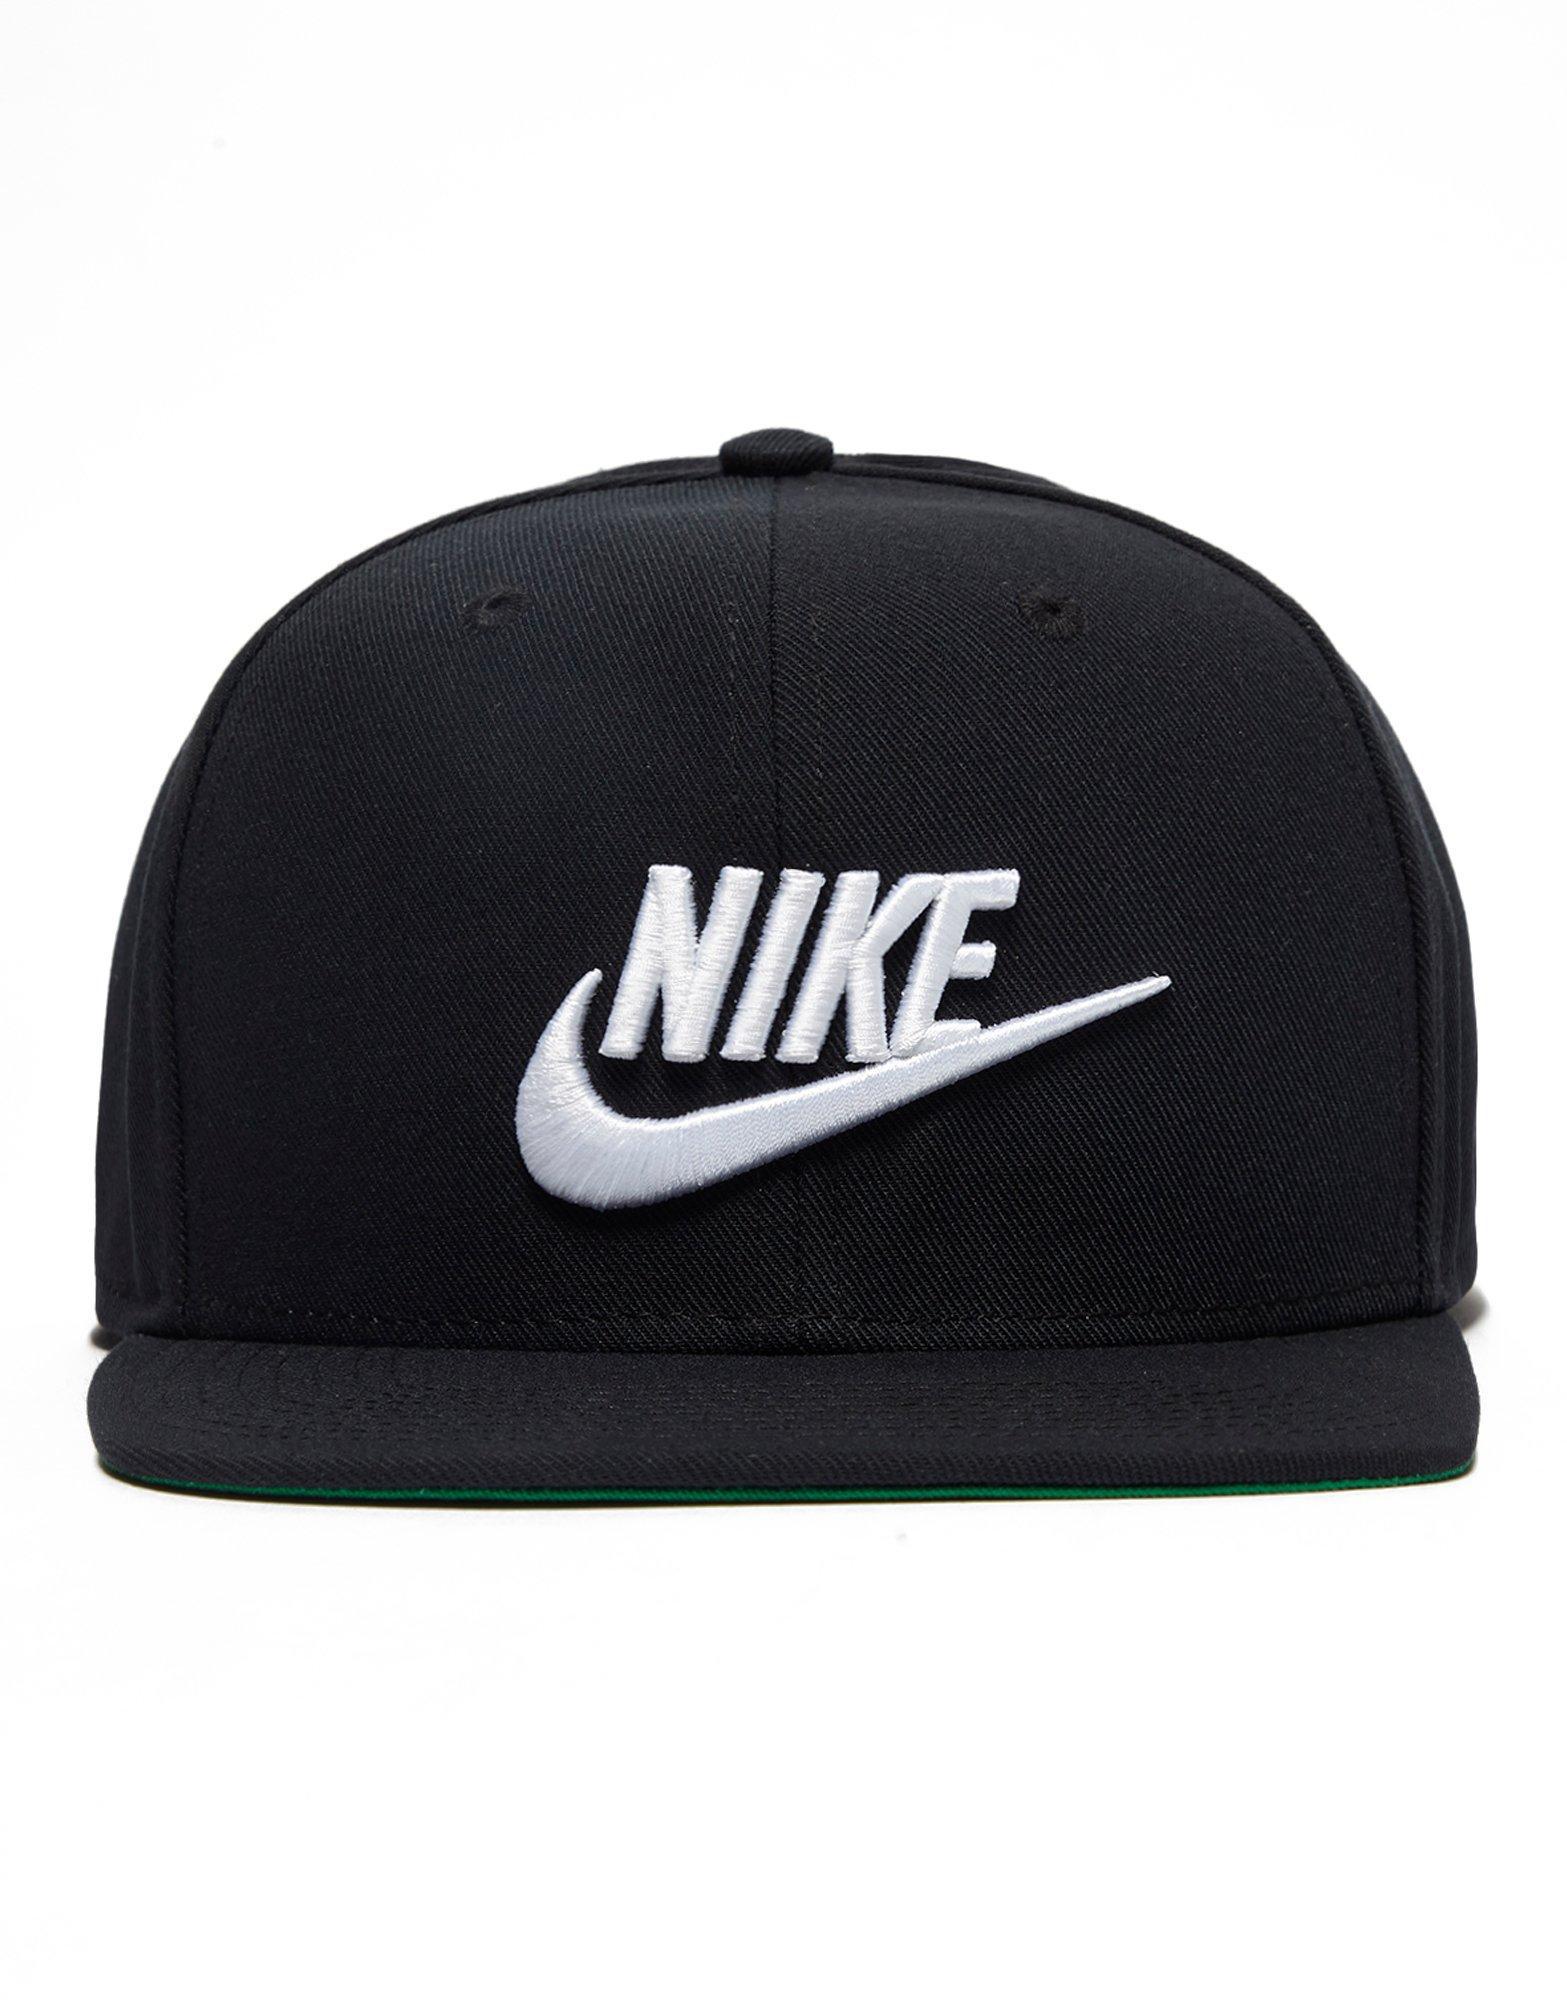 Nike Cotton Futura True 2 Snapback Cap in Black/White/Green (Black) - Lyst